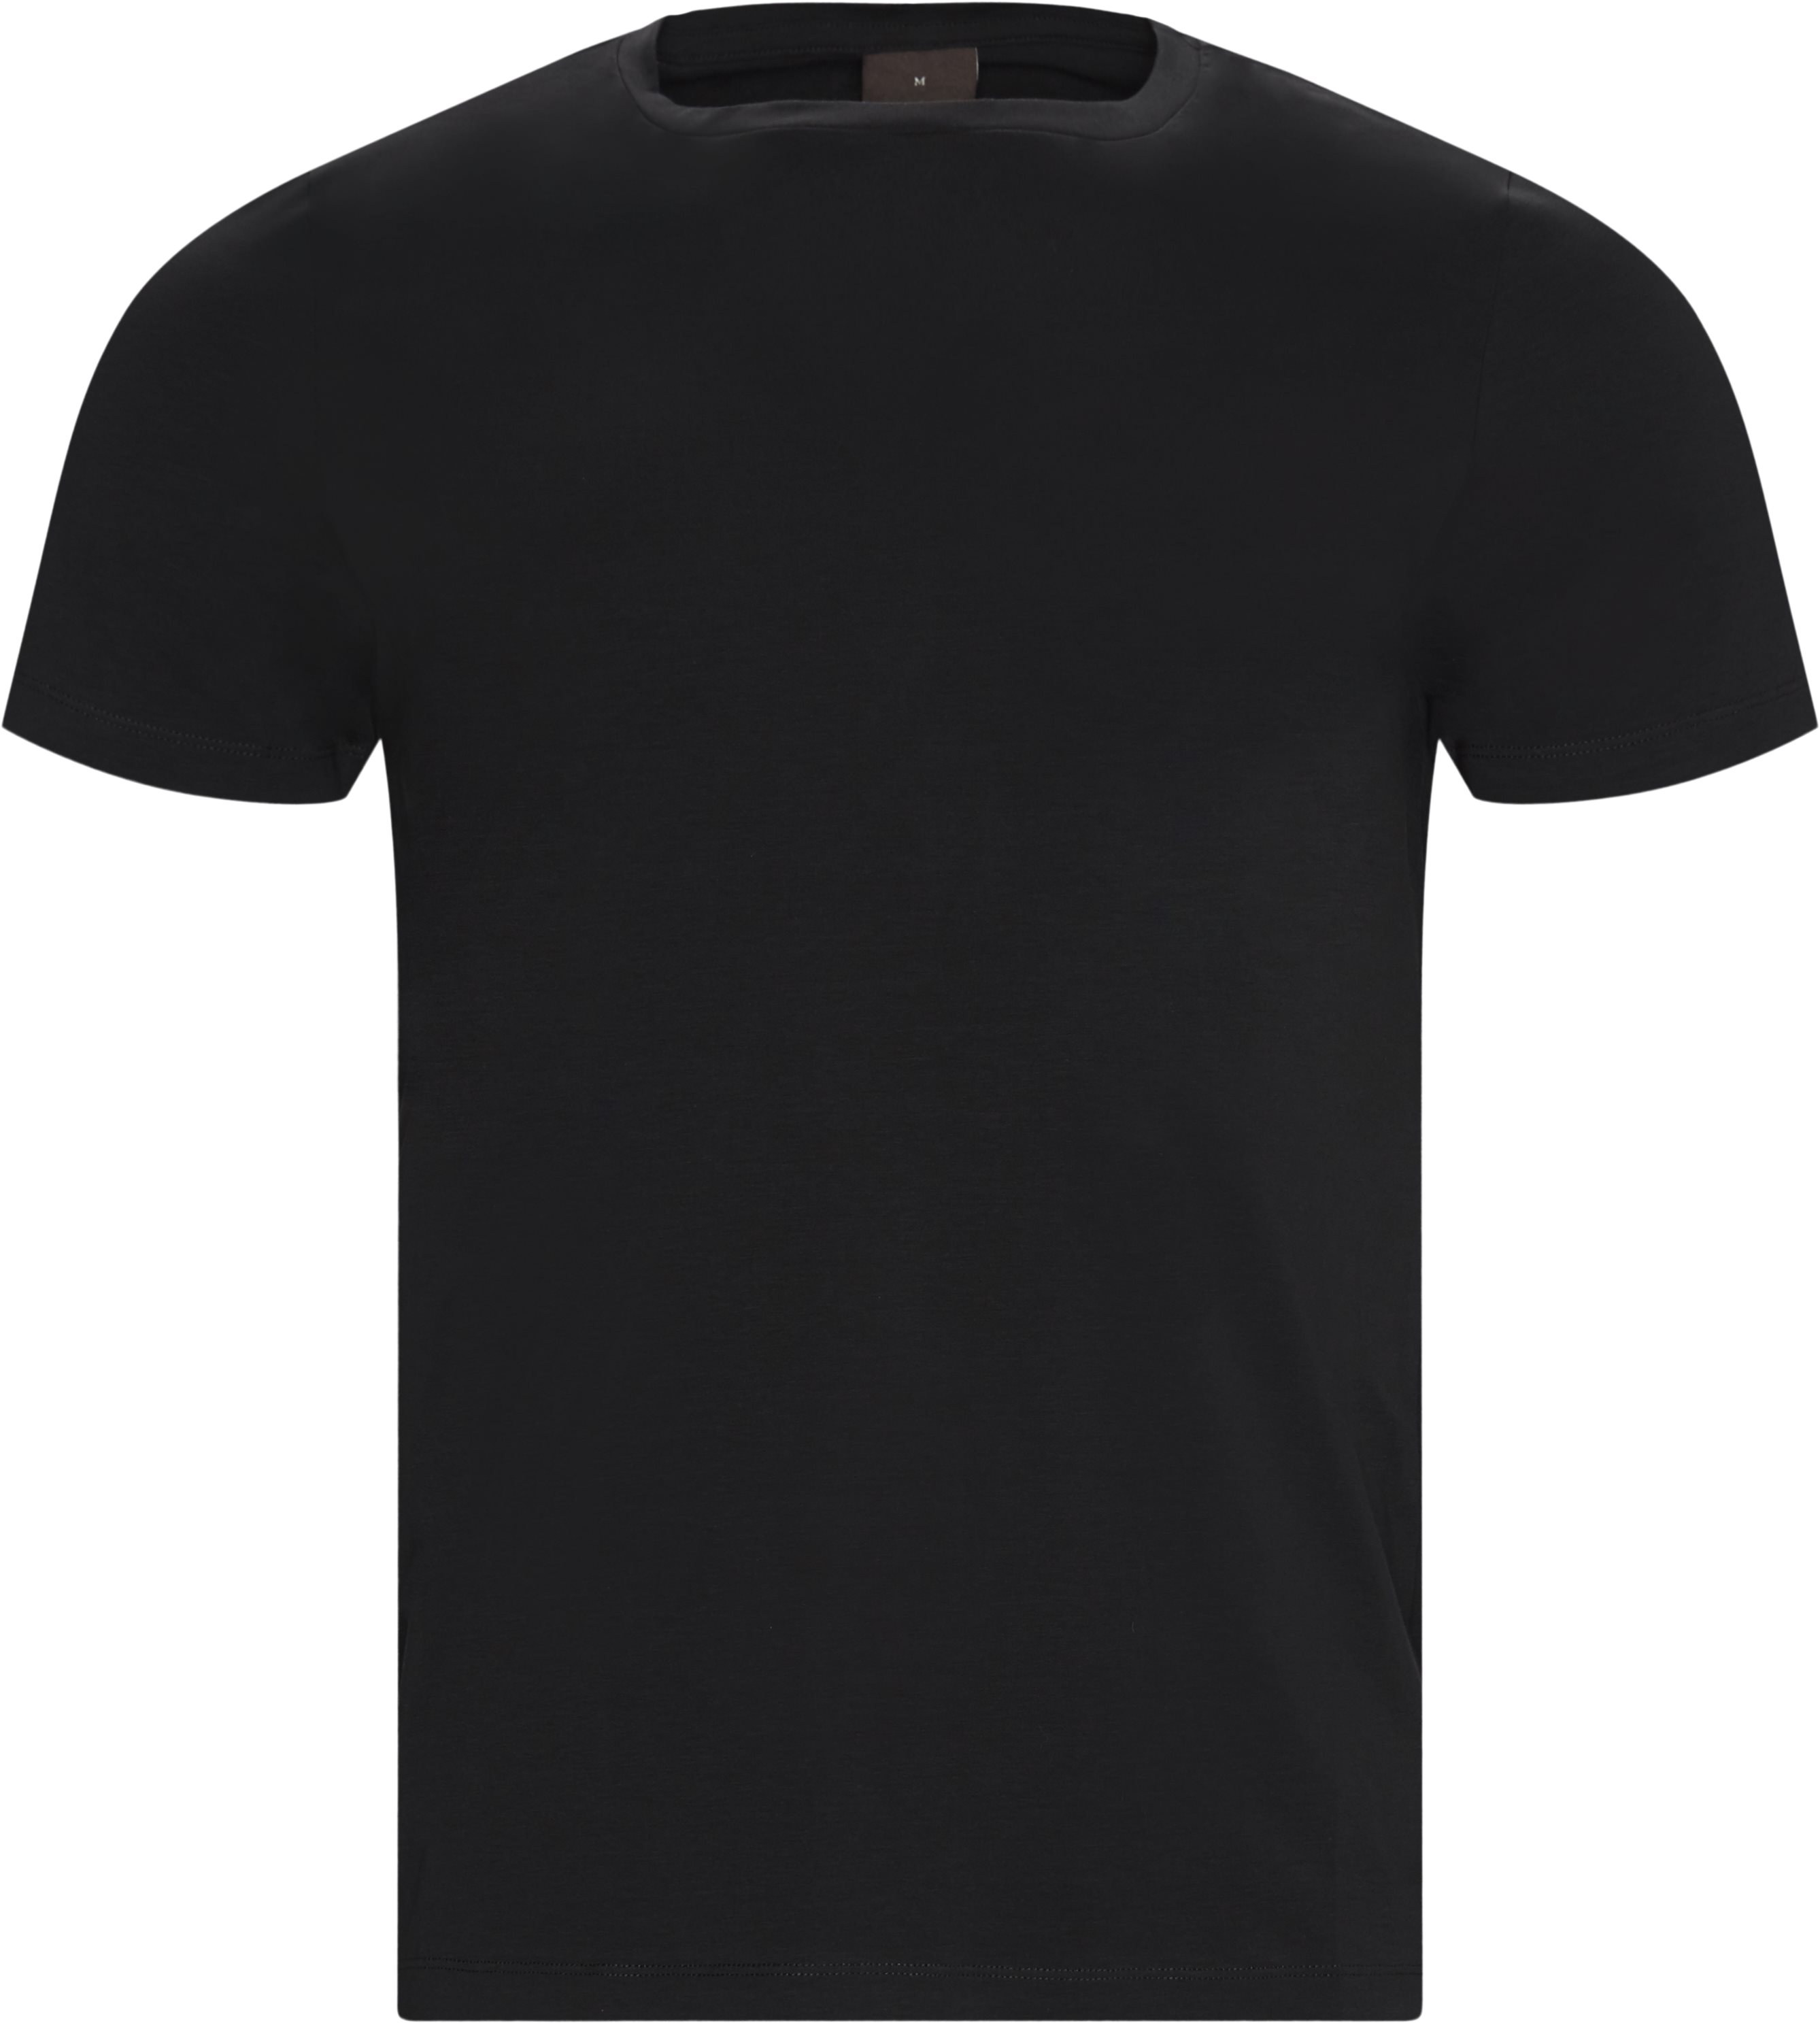 Kyran T-shirt - T-shirts - Regular fit - Black